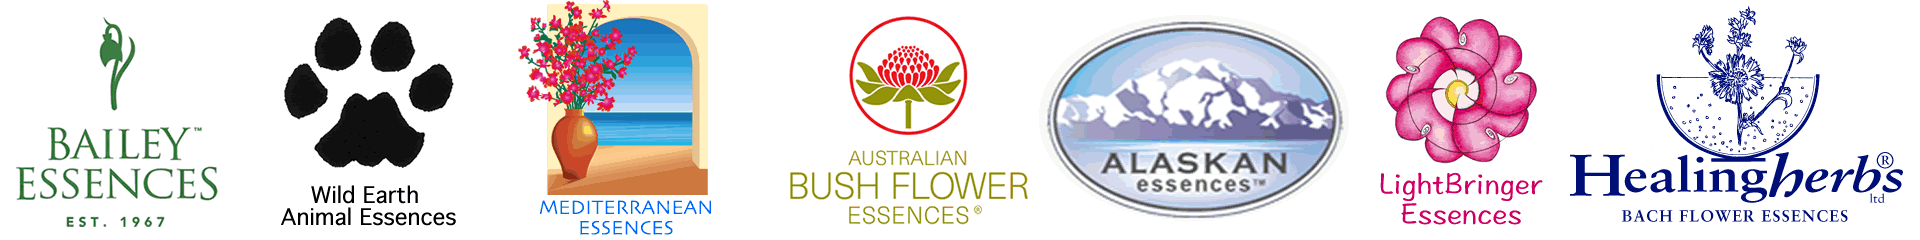 Flower Essences from around the world logos